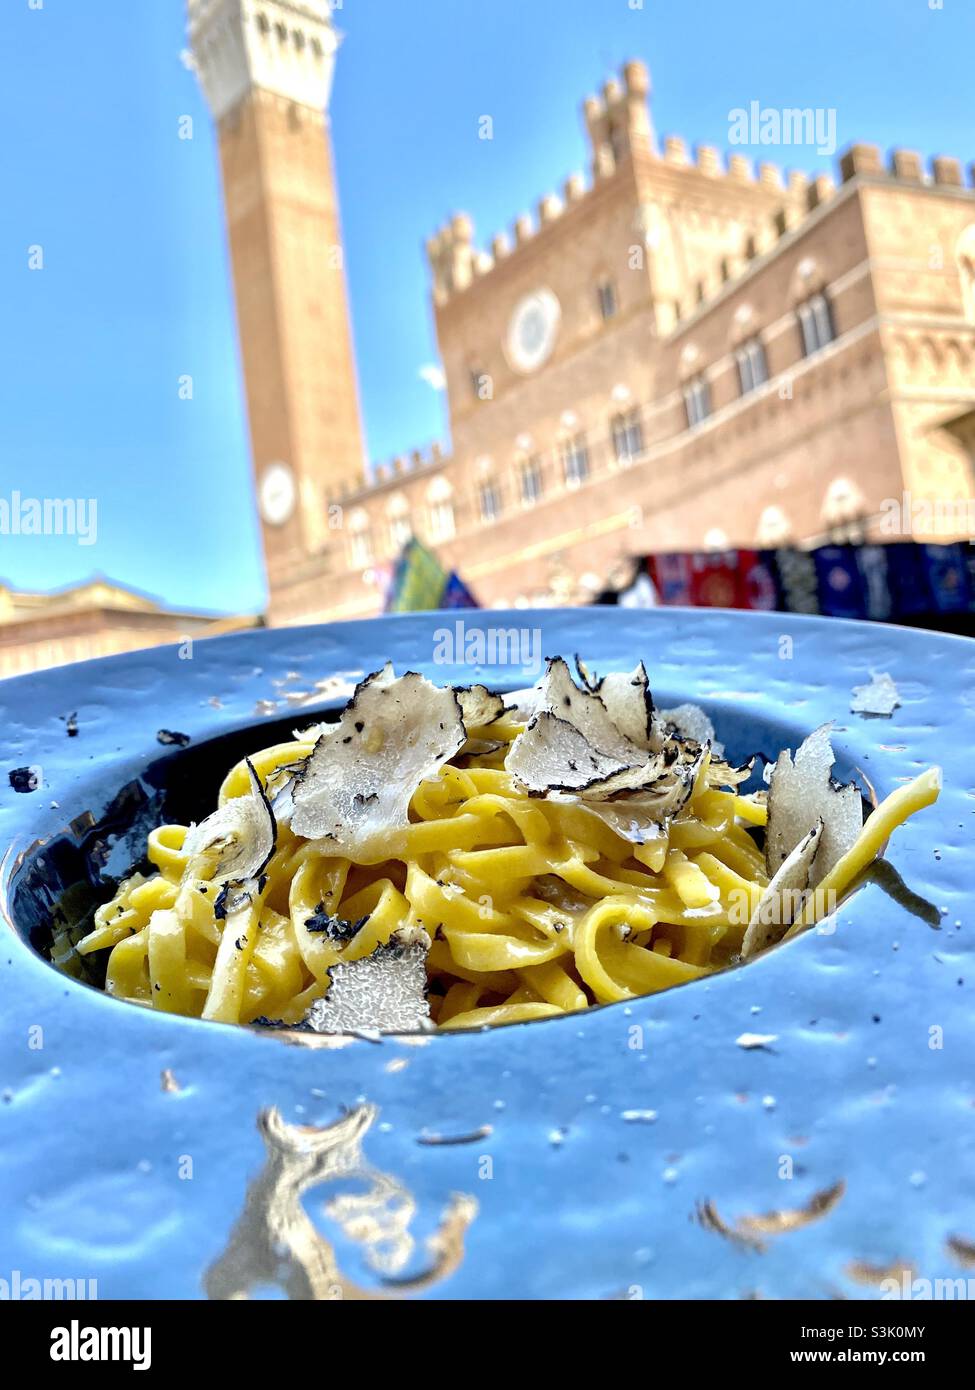 Comida al aire libre de Truffle fettuccine en la emblemática plaza de Sienna, Italia Foto de stock